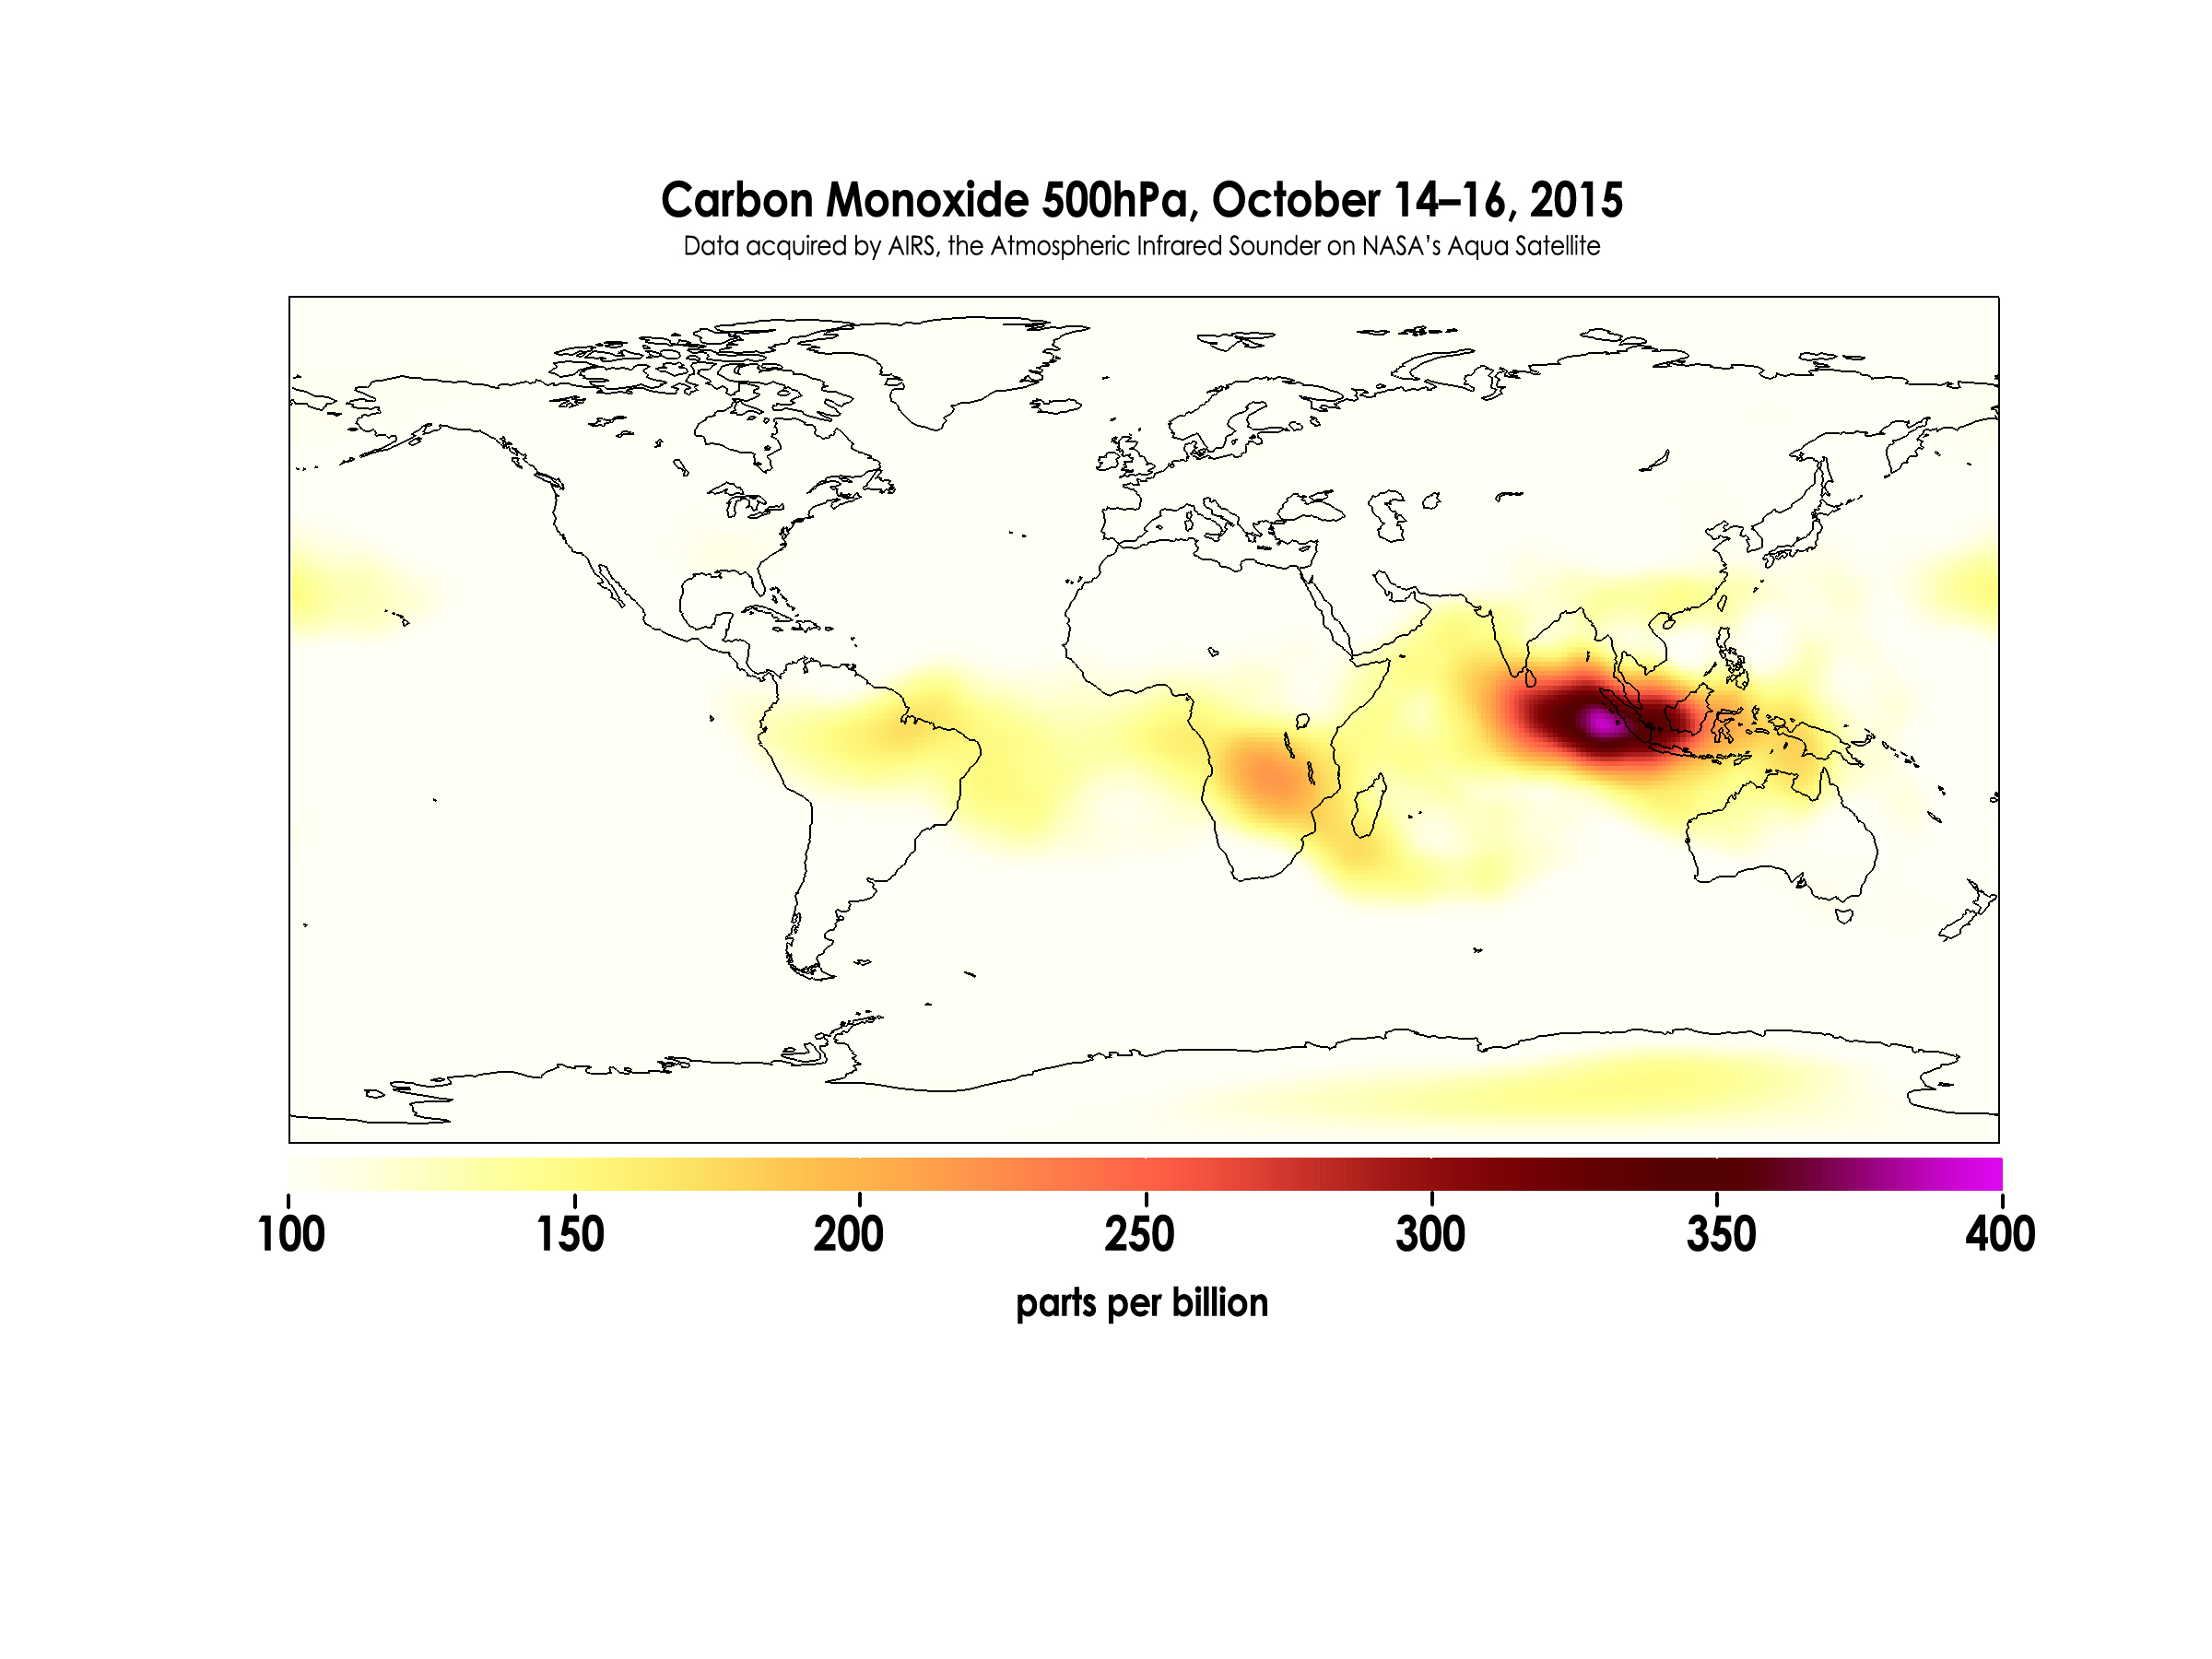 Carbon Monoxide in Mid-Troposphere over Indonesia Fires, October 14-16, 2015